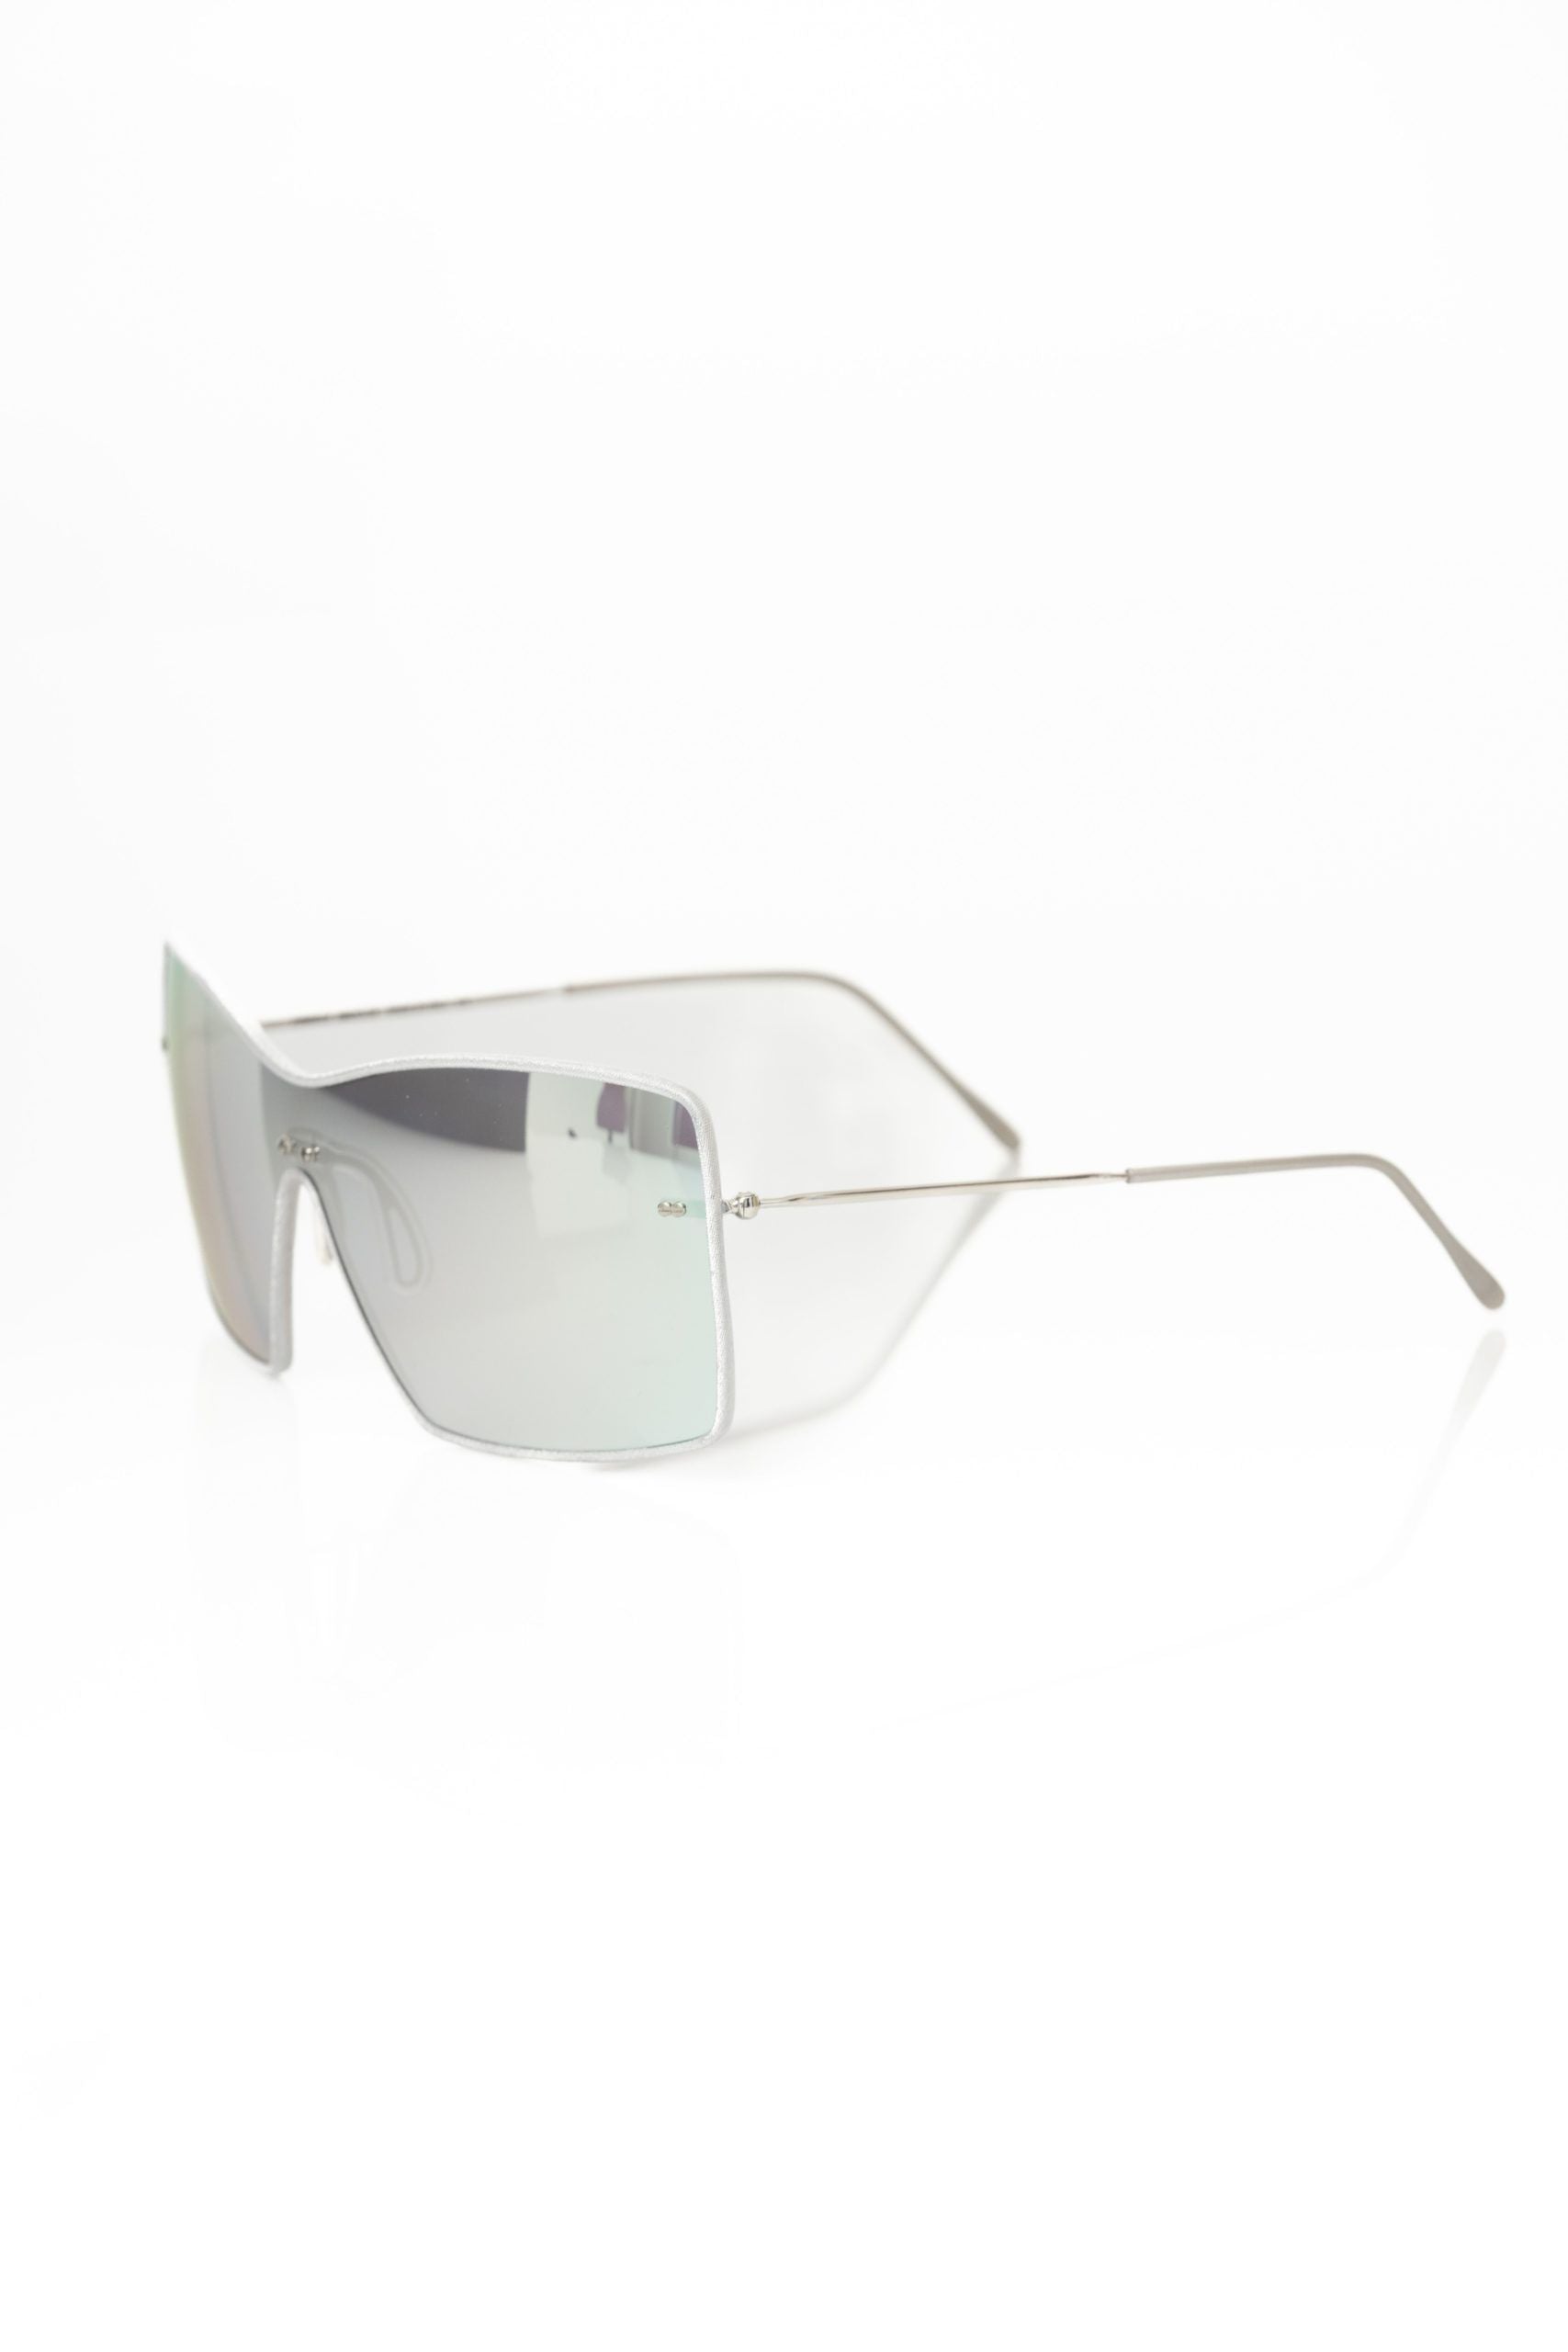 Sleek Silver Shield Sunglasses - Divitiae Glamour